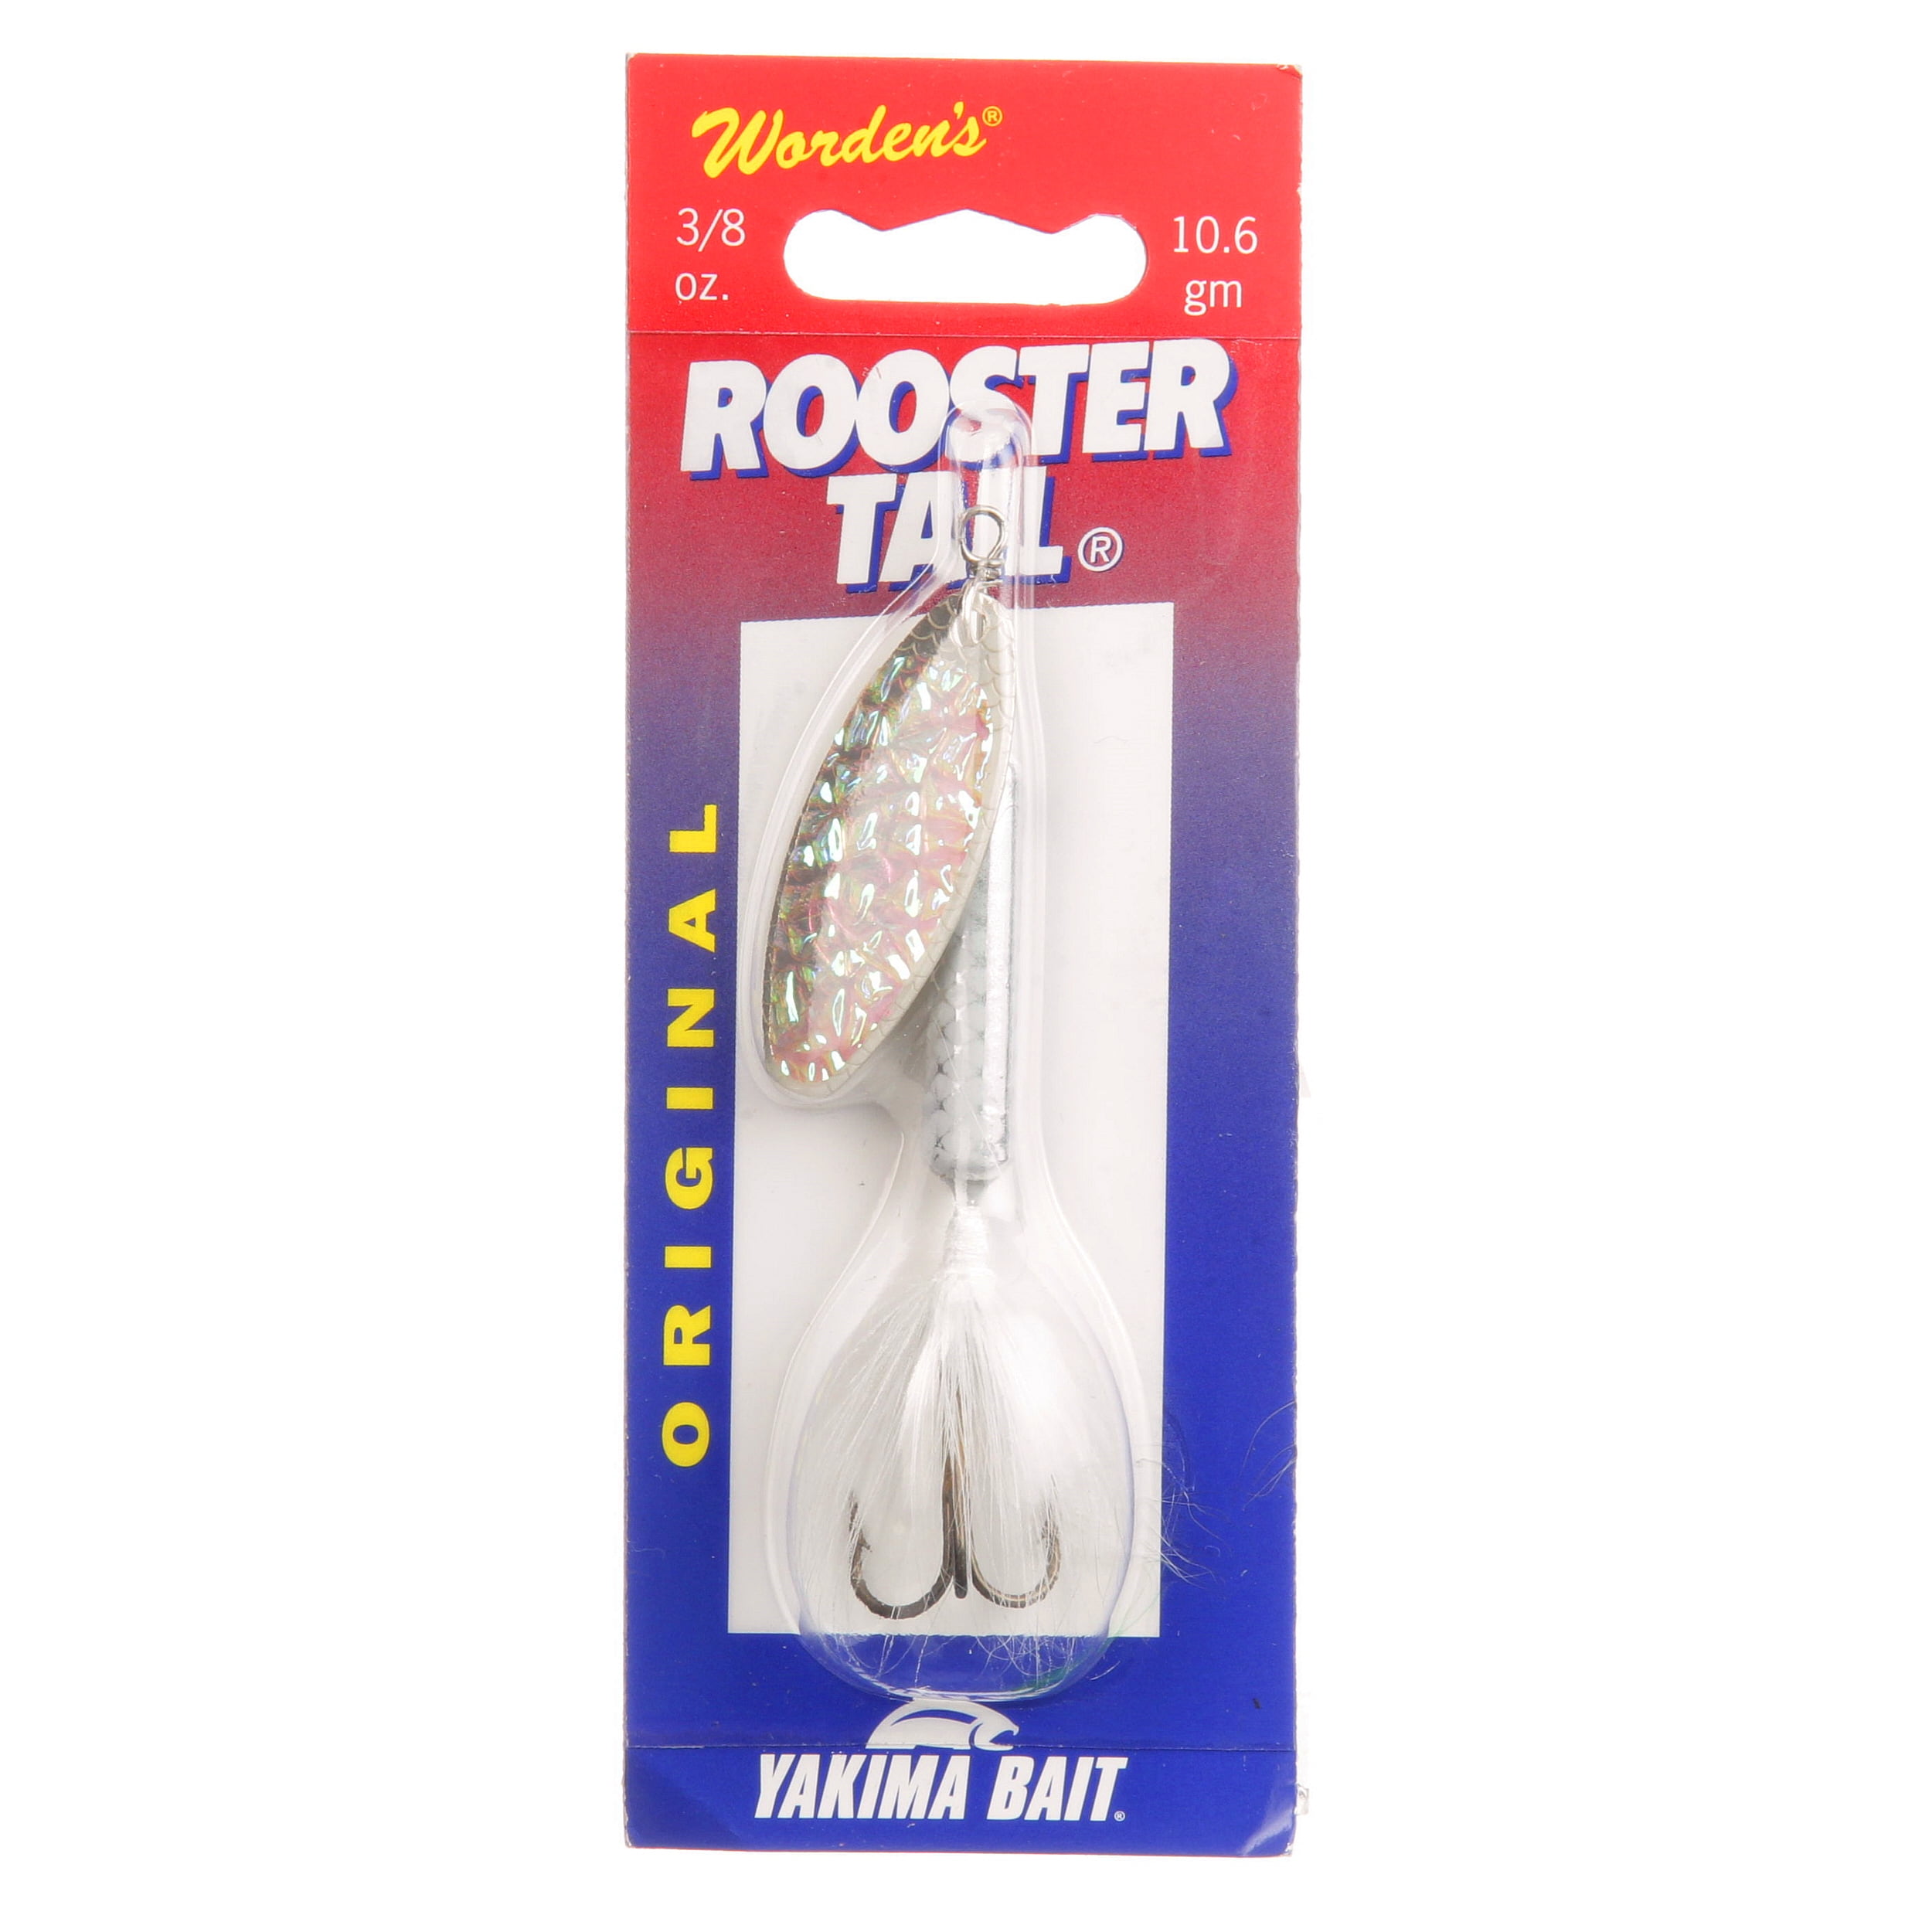 Worden's® Original Glow Tuxedo Blade 1/8 oz. Rooster Tail®, Inline  Spinnerbait Fishing Lure